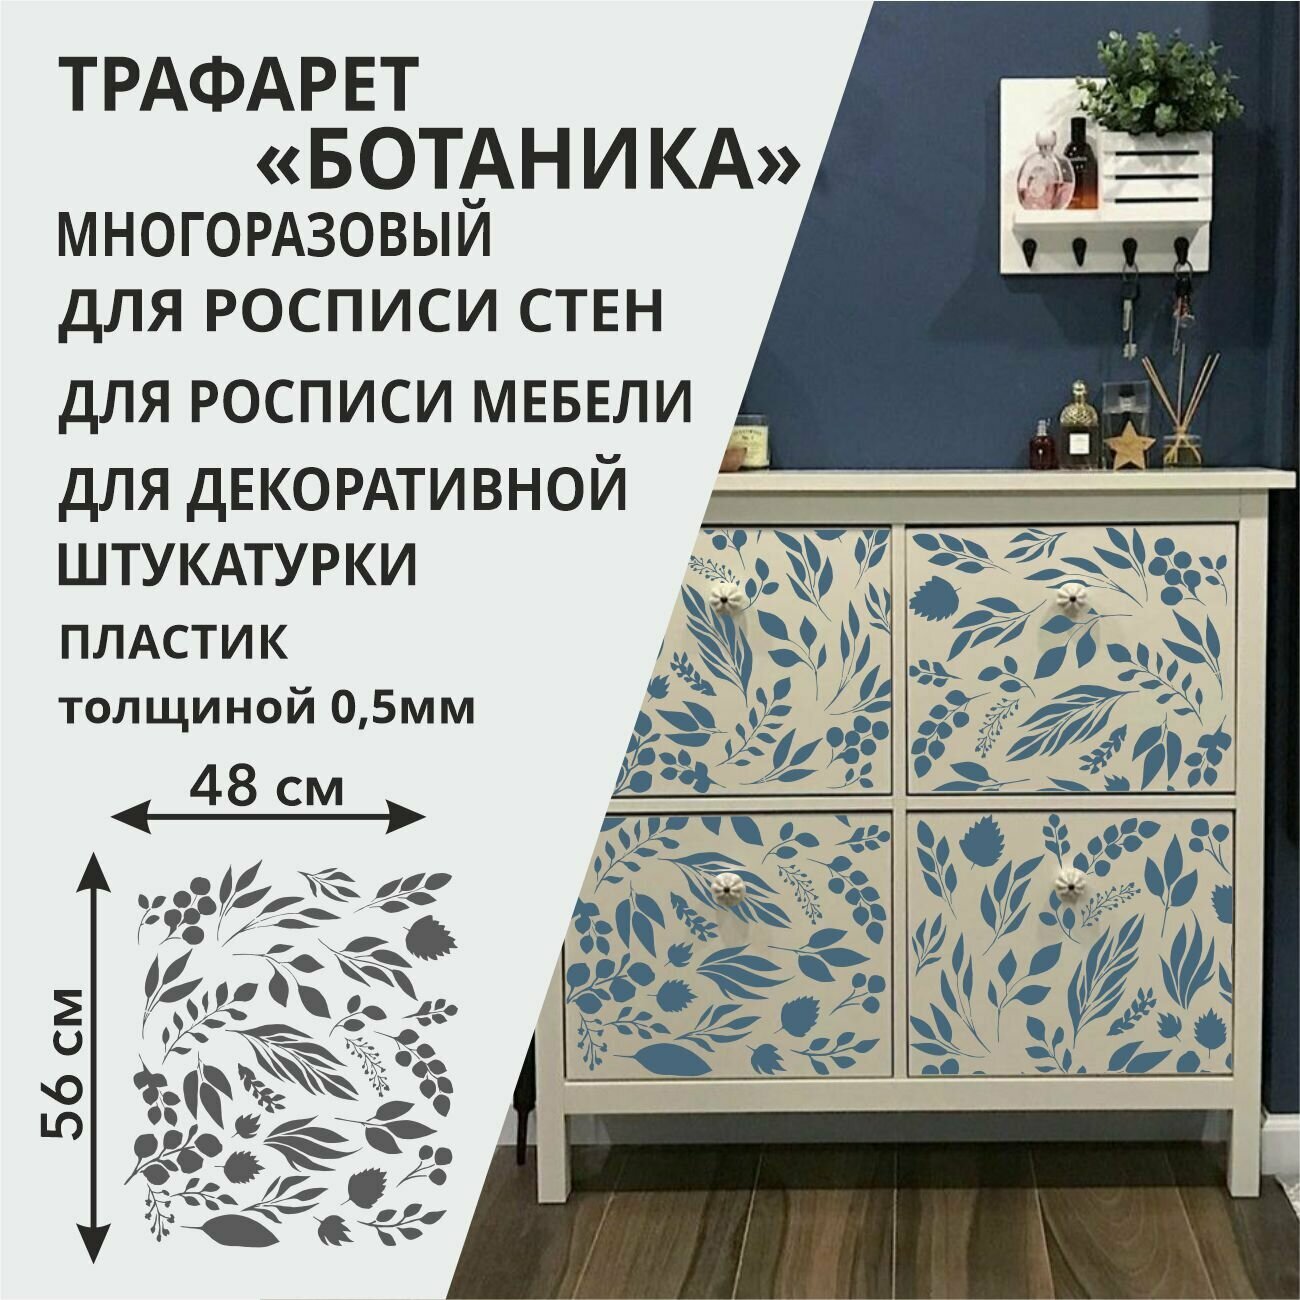 Трафарет "Ботаника" 60х52 см - для творчества и декора стен, мебели, плитки и штукатурки. Многоразовый, пластик 0,5 мм